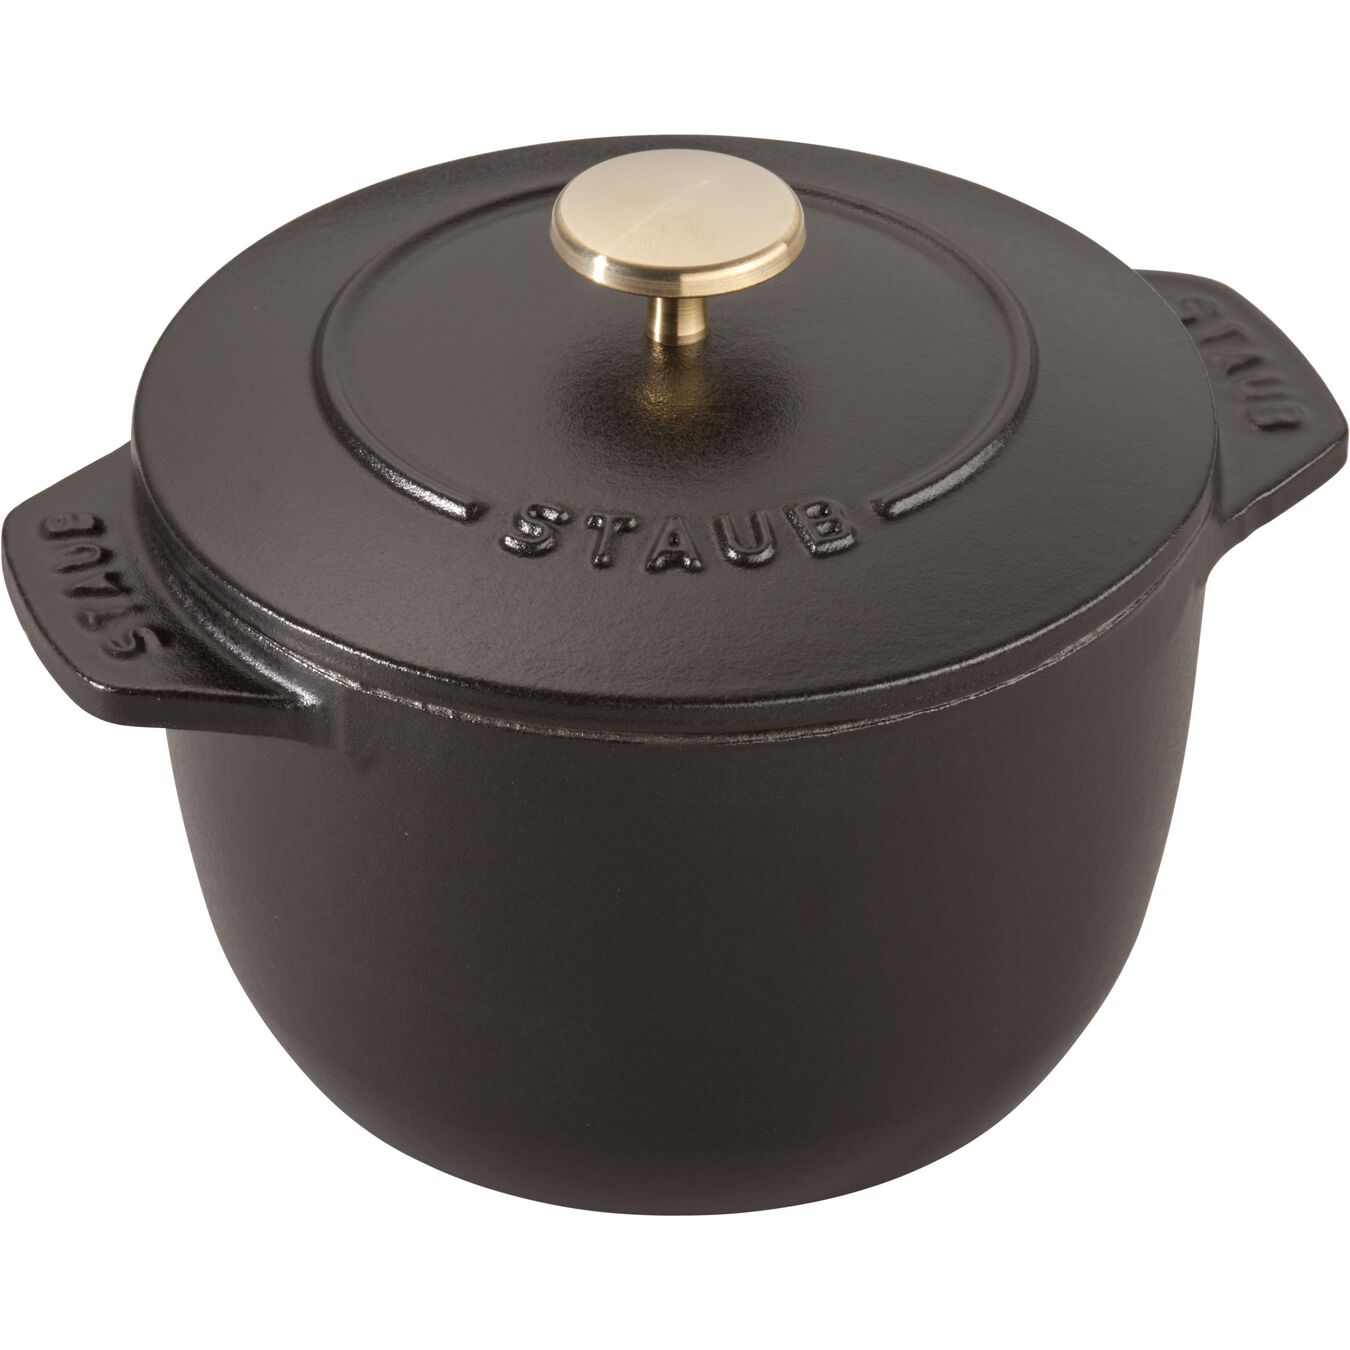 725 ml cast iron round Rice Cocotte, black,,large 2